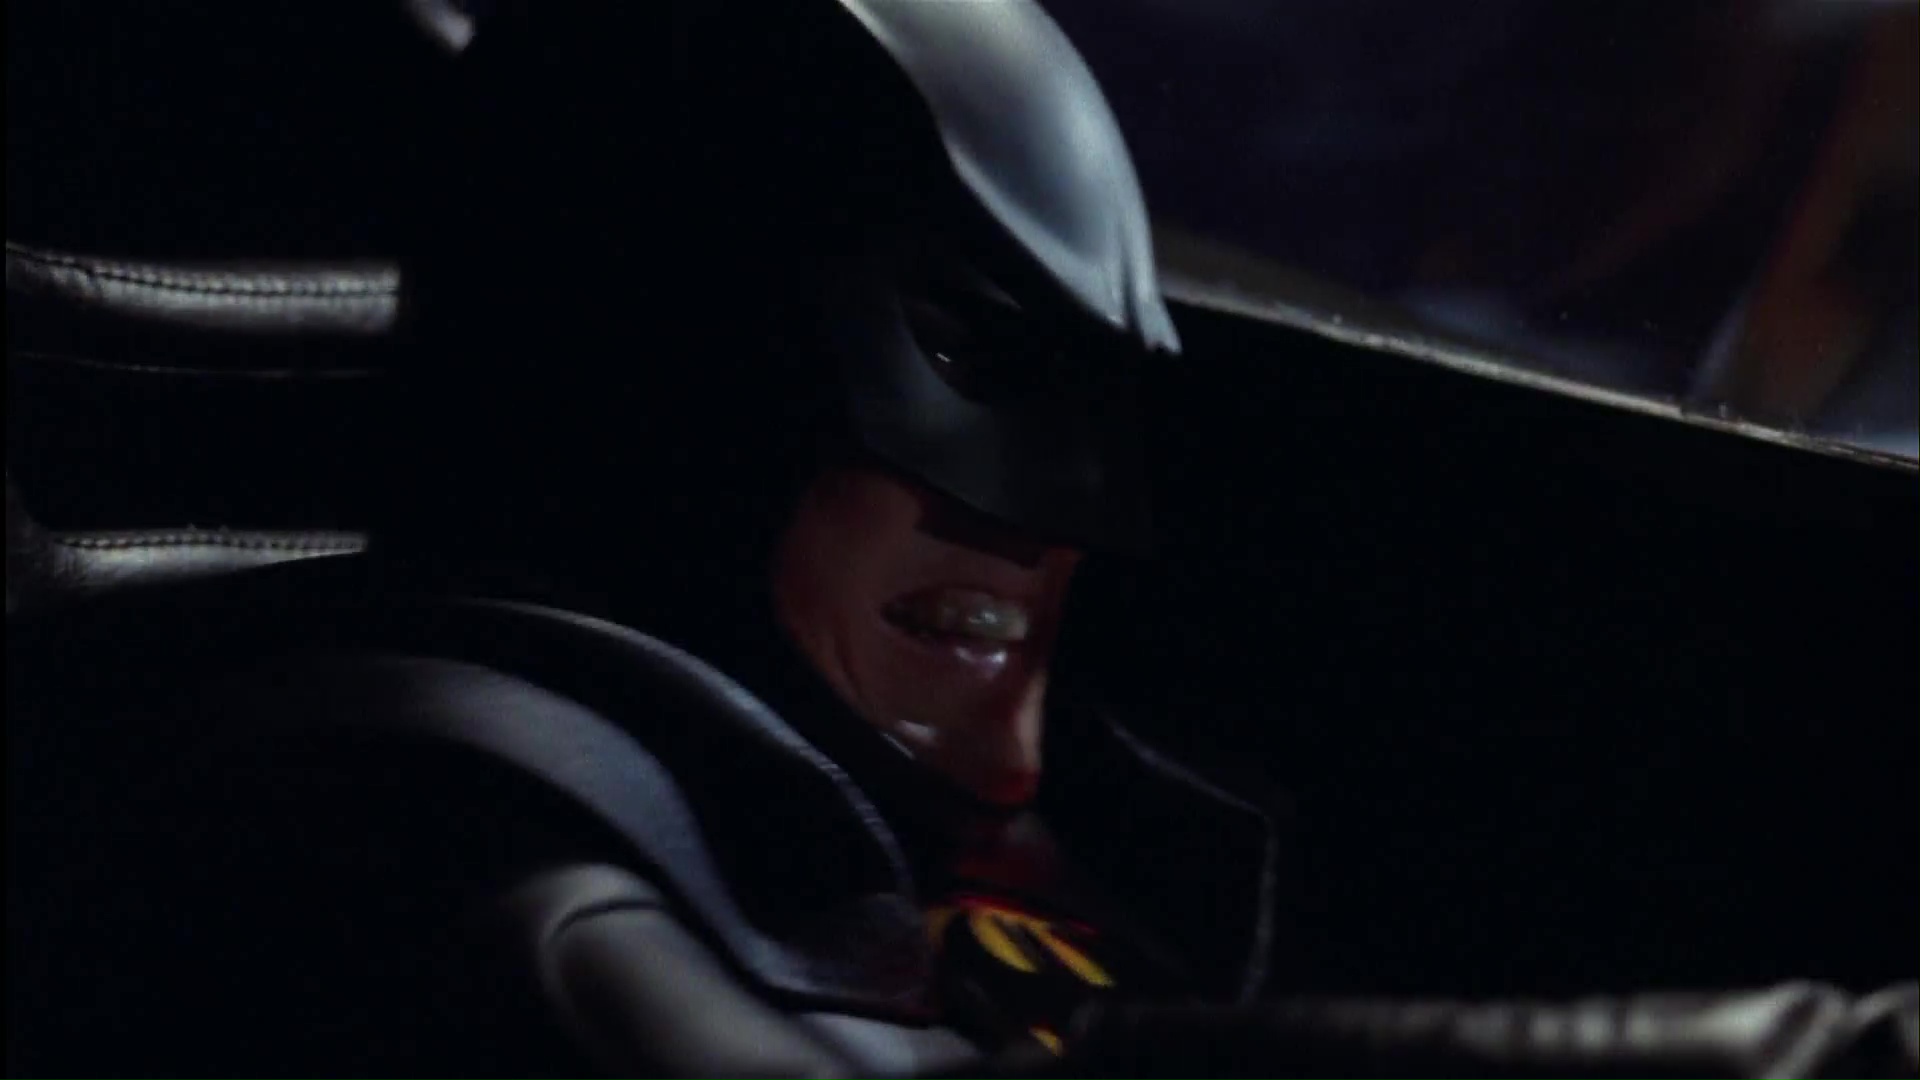 batman - Batman 2 Regresa 1080p Lat-Cast-Ing 5.1 (1992) BJ11K25W_o